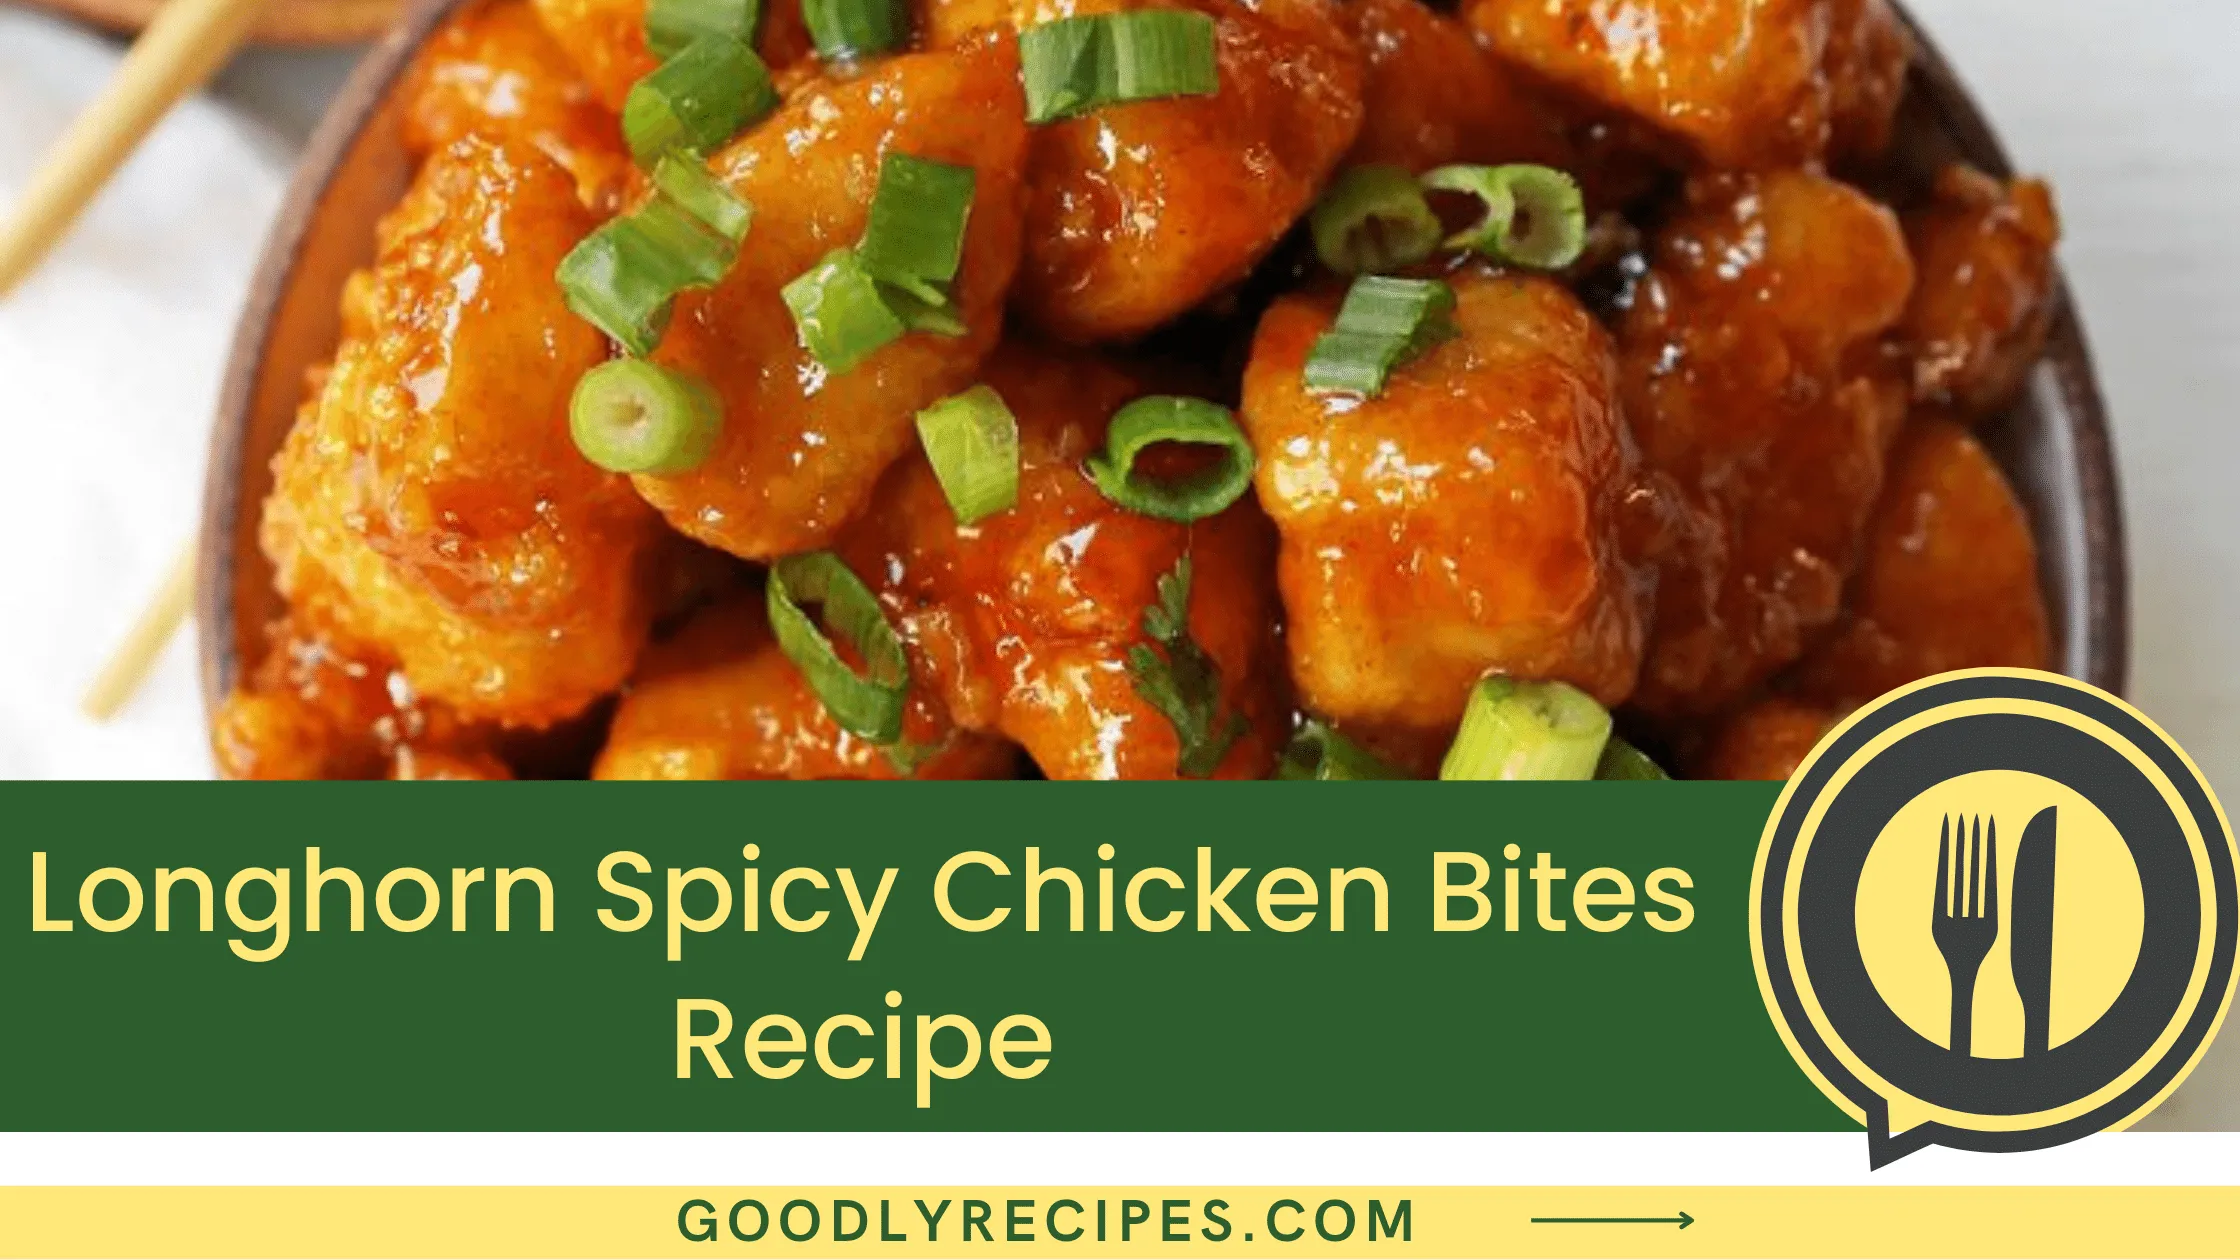 What Are Longhorn Spicy Chicken Bites?